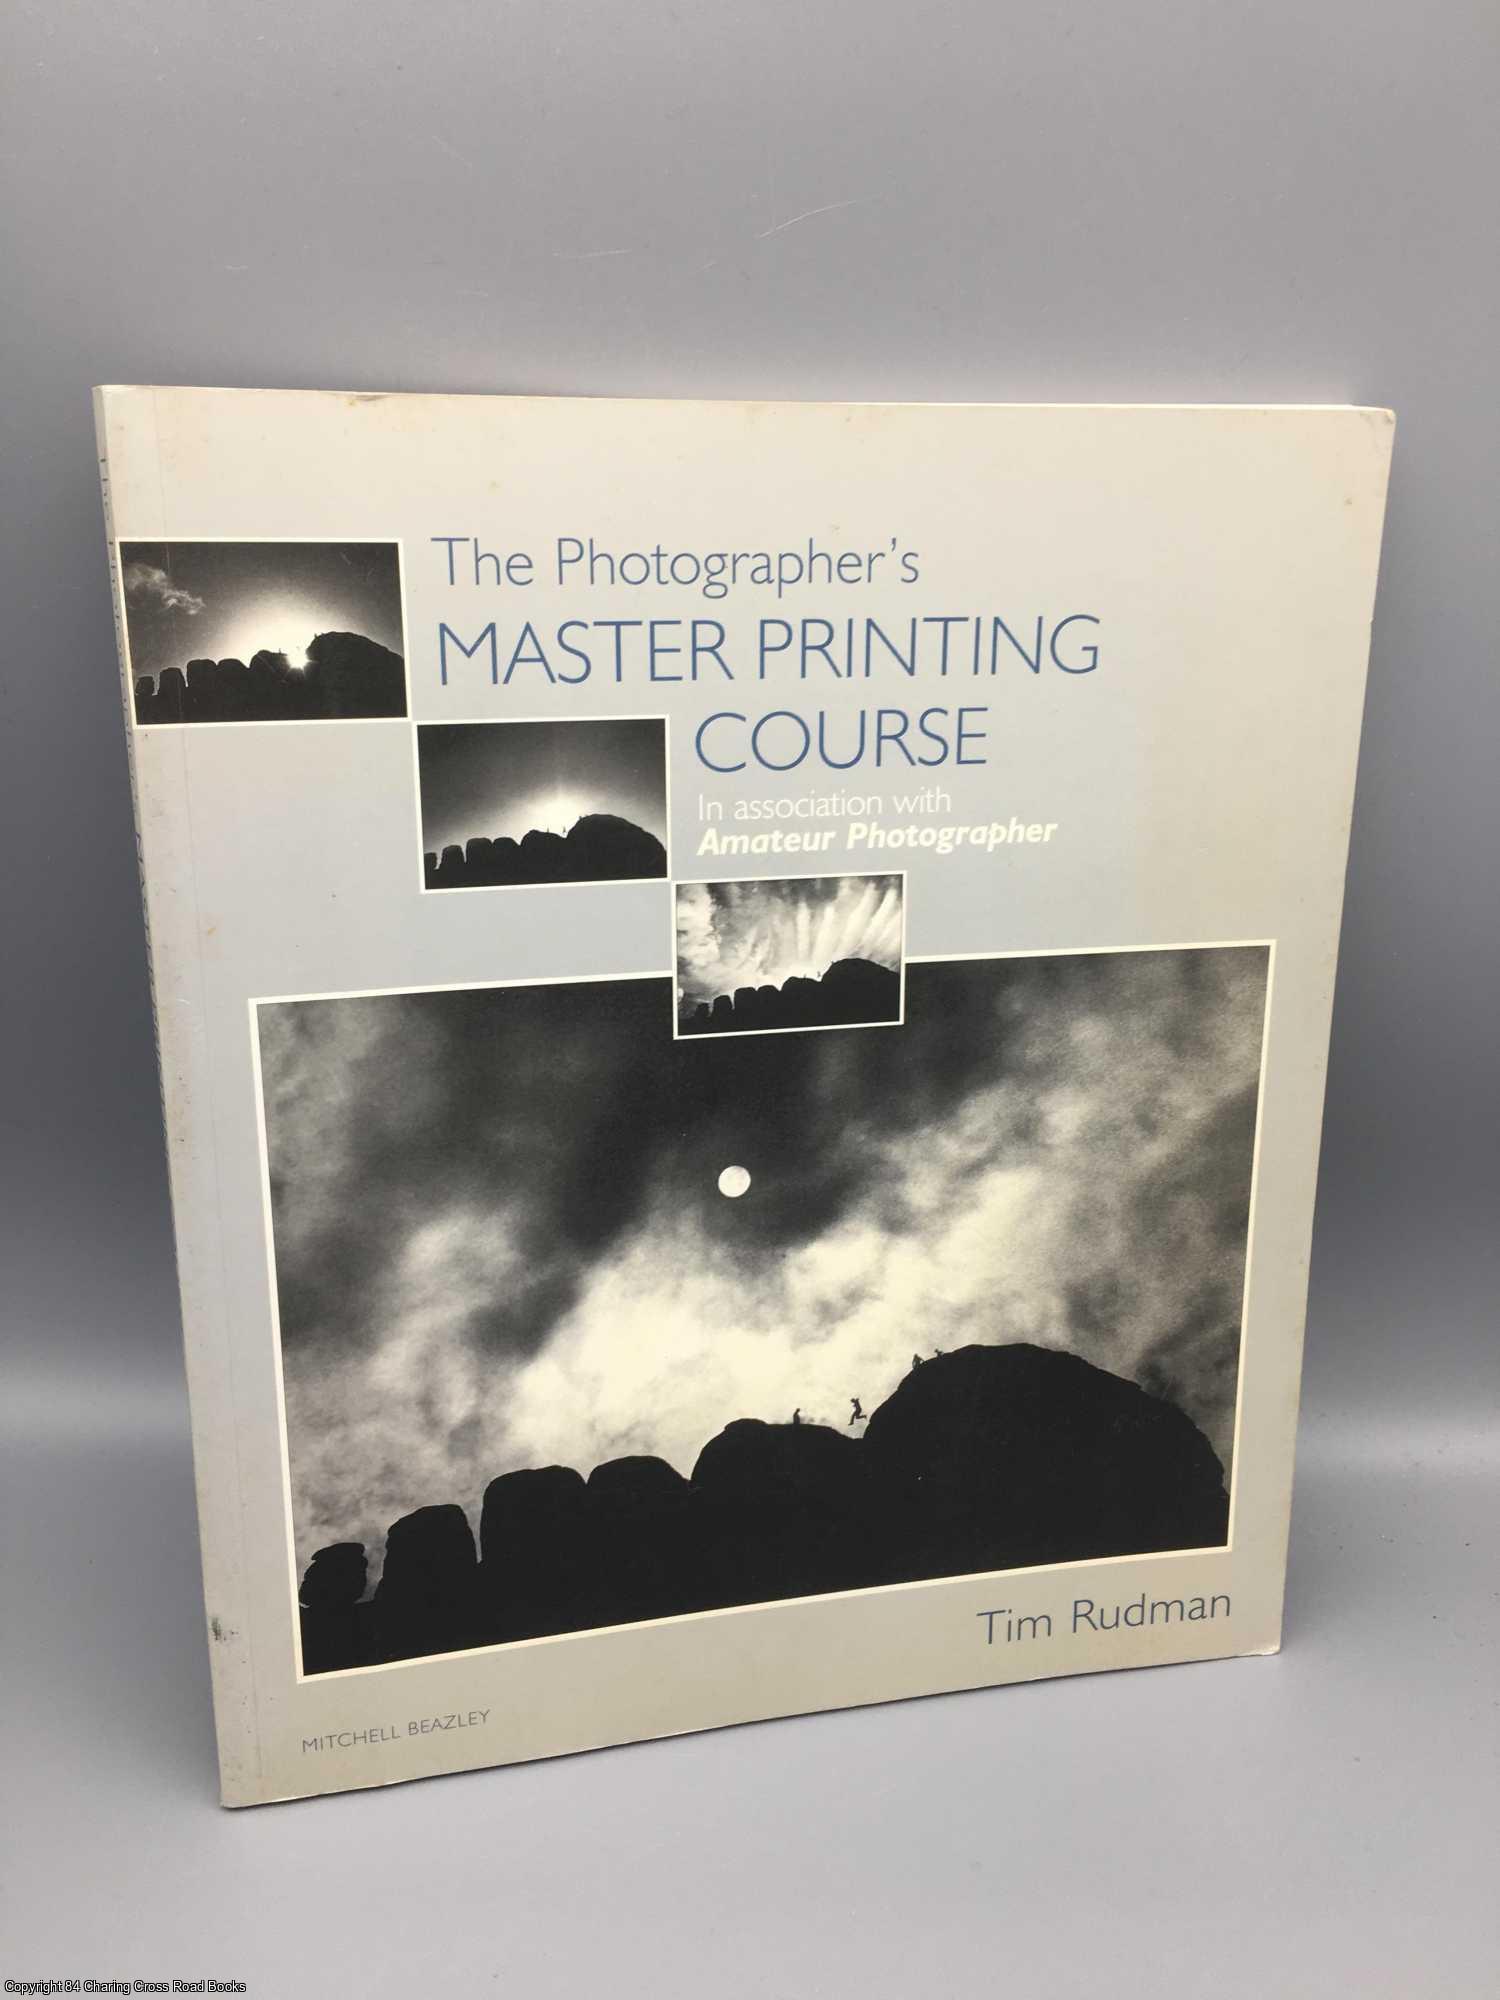 Rudman, Tim - The Photographer's Master Printing Course